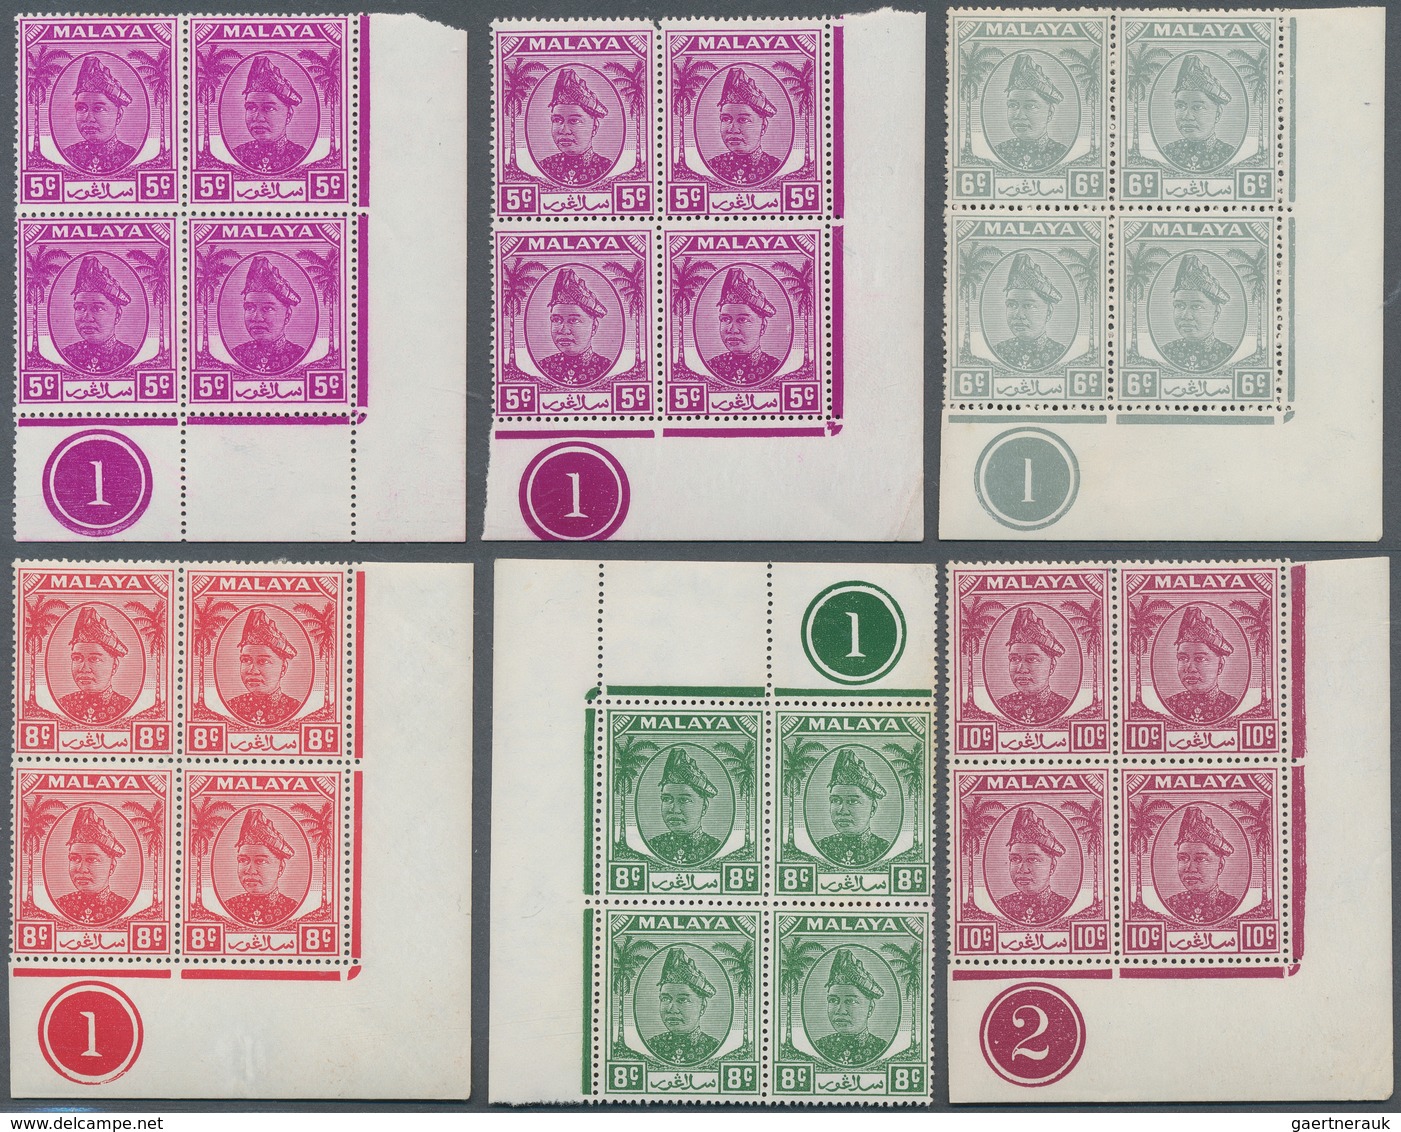 Malaiische Staaten - Selangor: 1949/1955, Definitives Sultan Hisamud-din Alam Shah 1c. - $1, group o